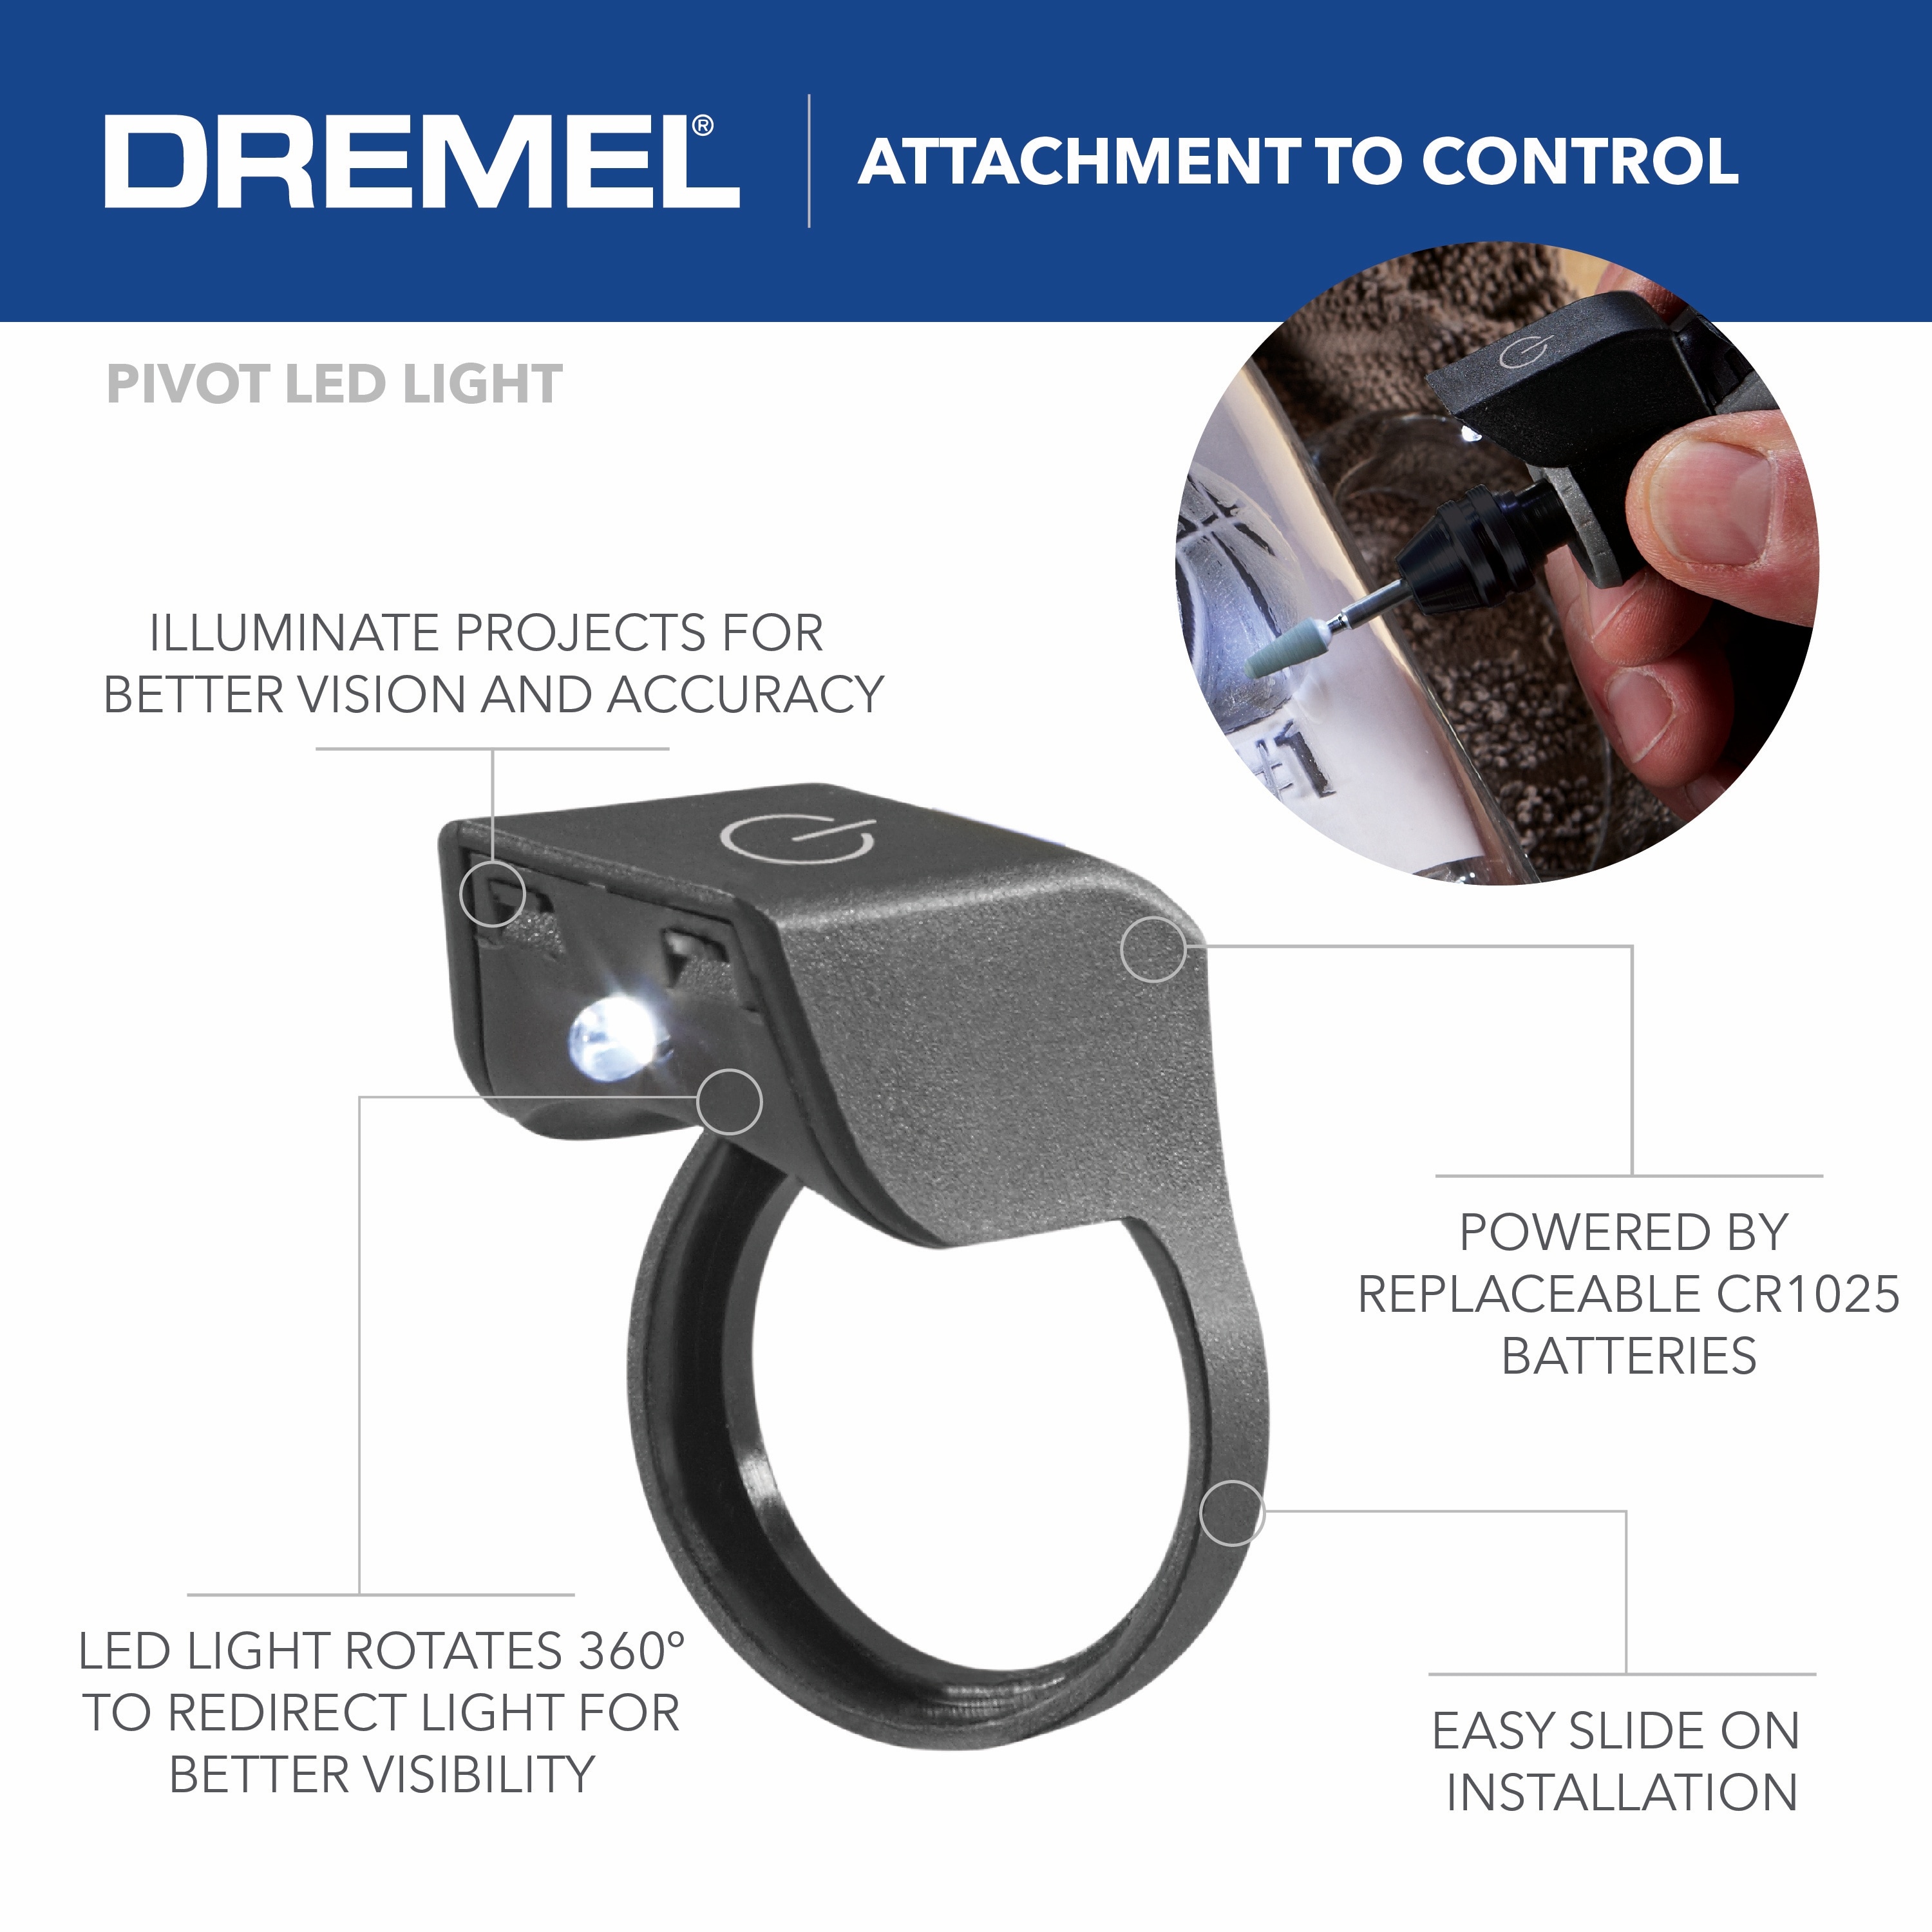 DREMEL® 4300 Corded Tools